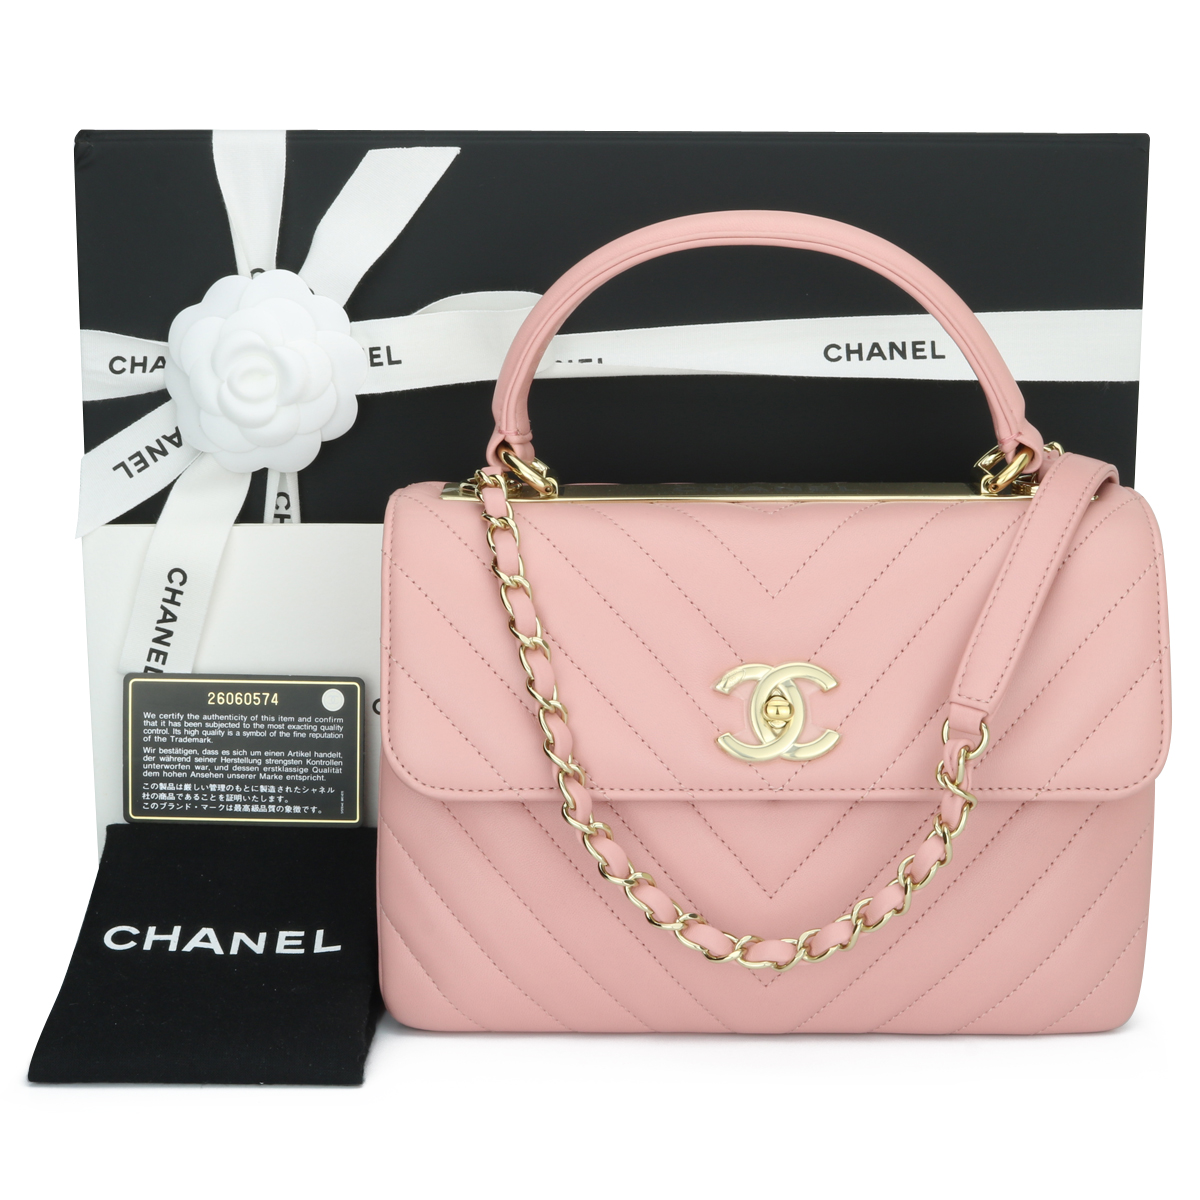 Chanel Trendy CC Top Handle Bag Chevron Lambskin Small Green 2209731